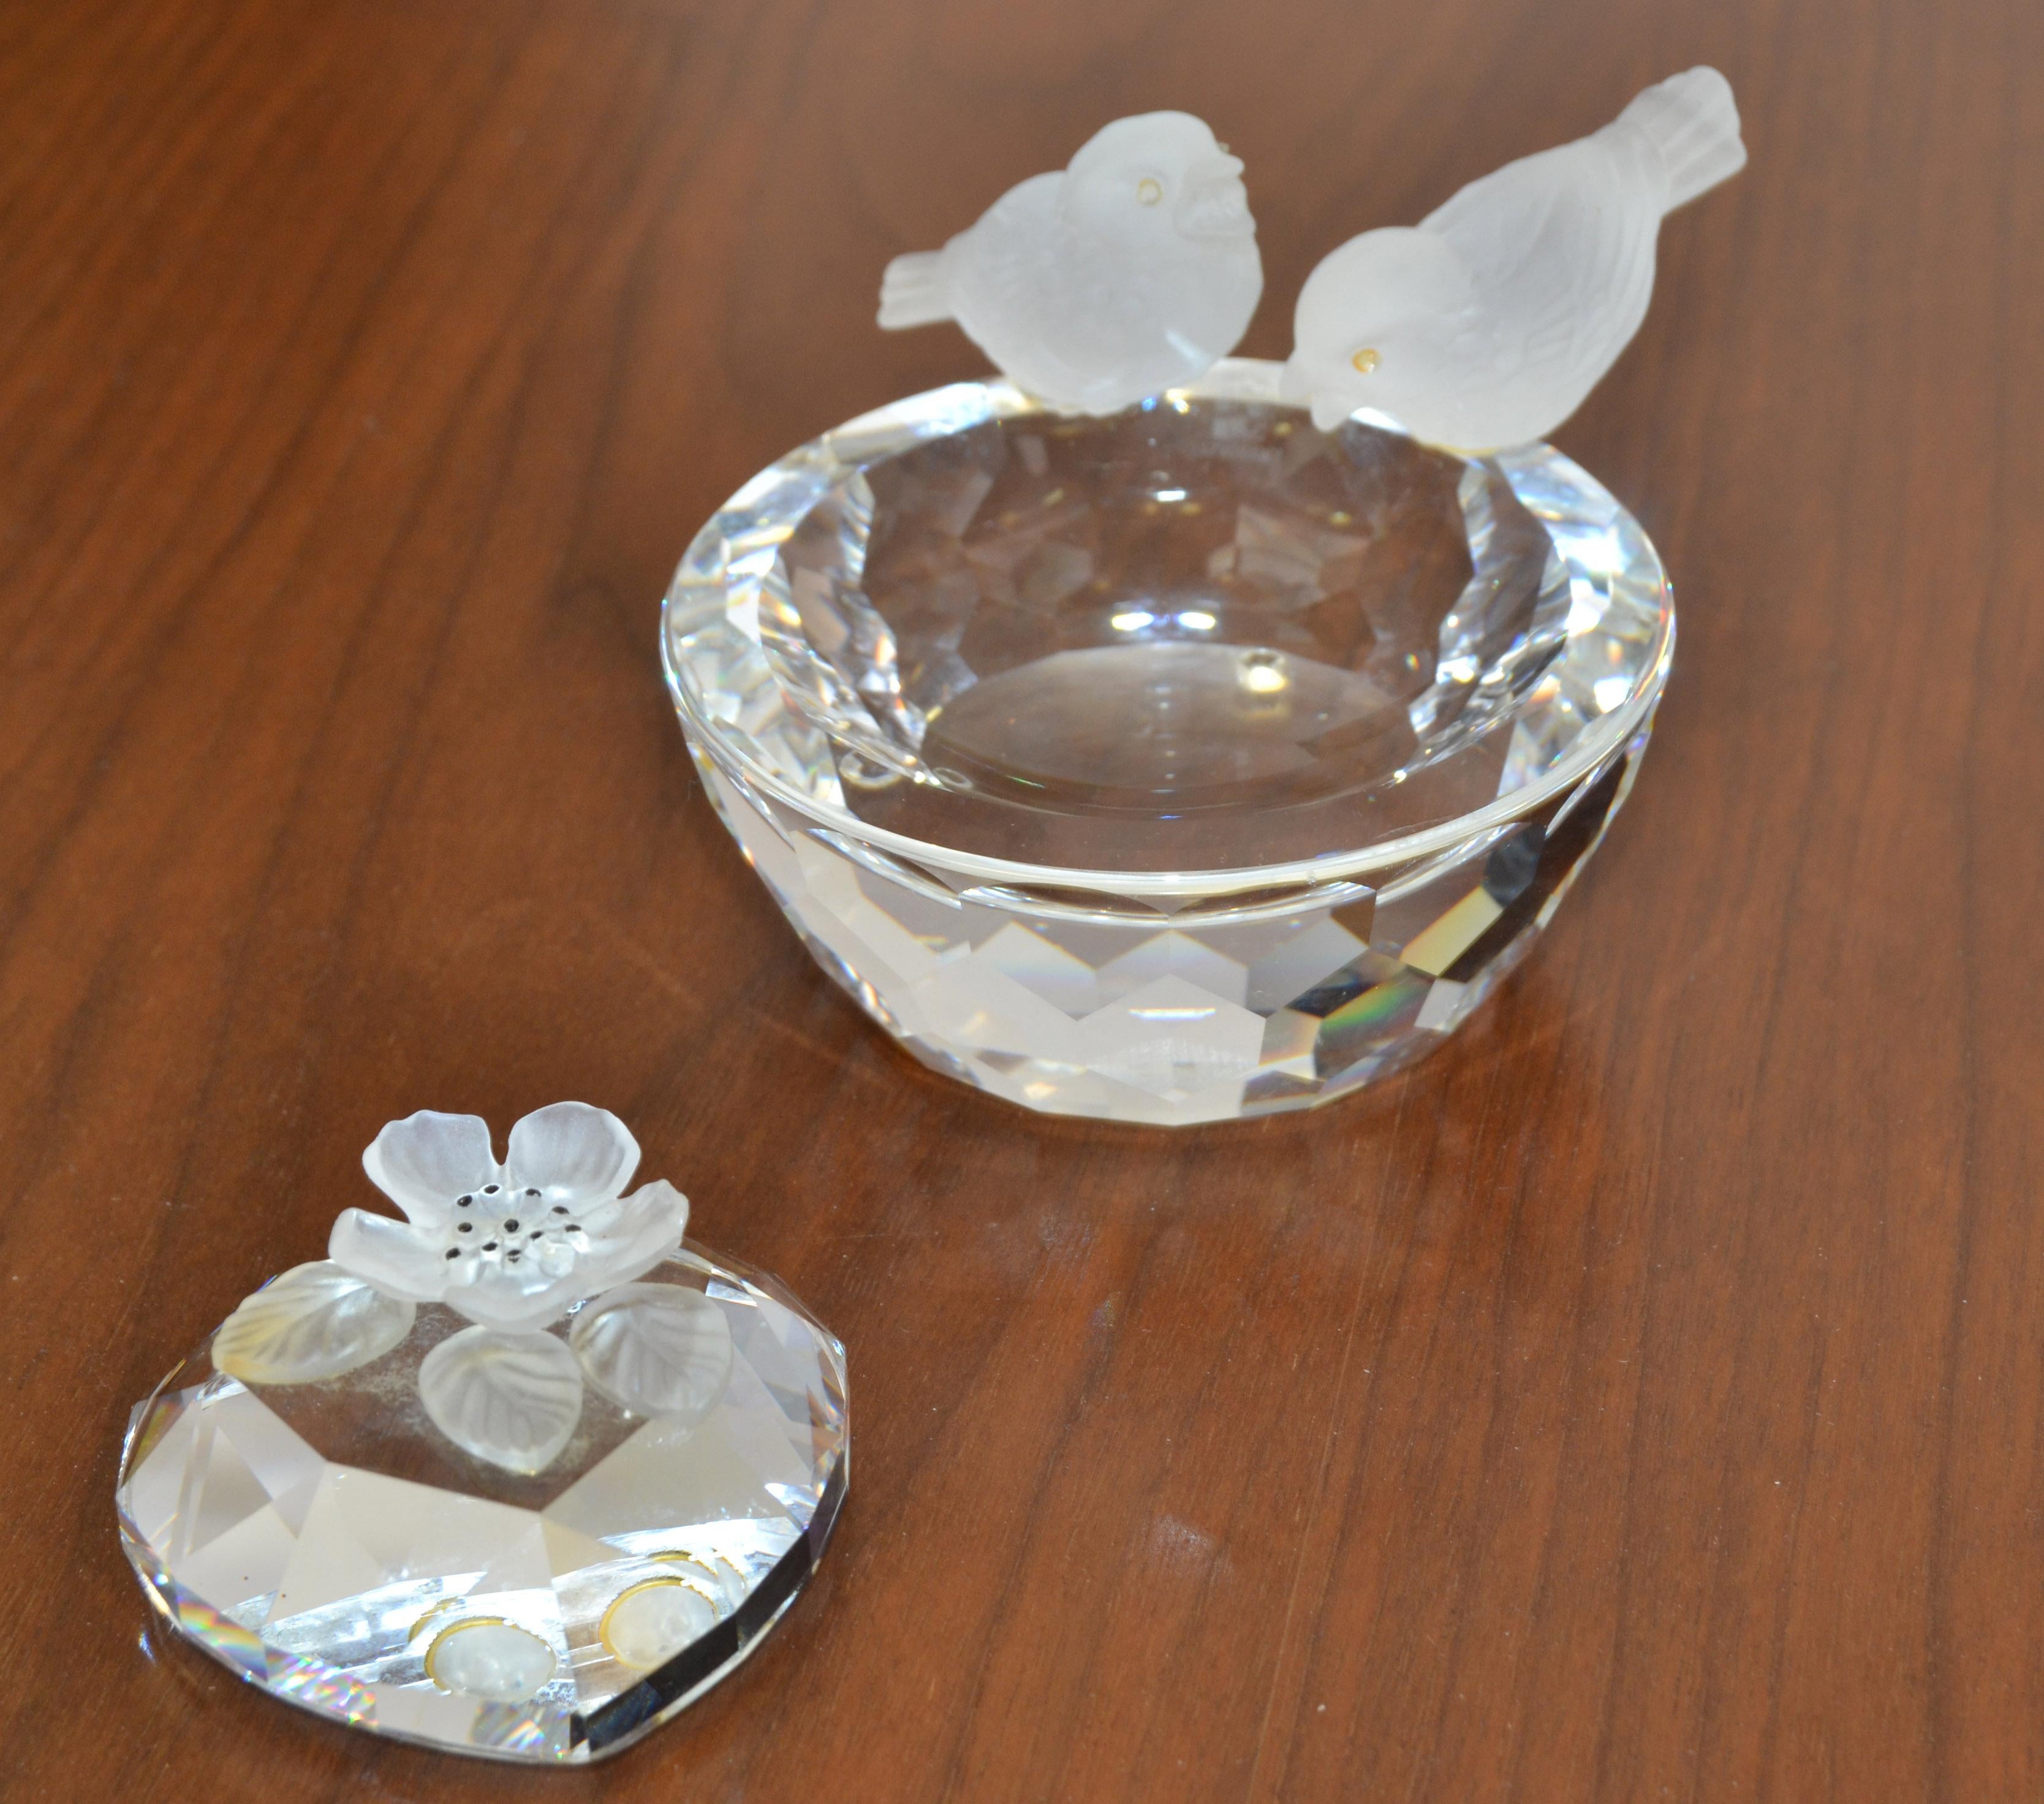 swarovski bowl with crystals